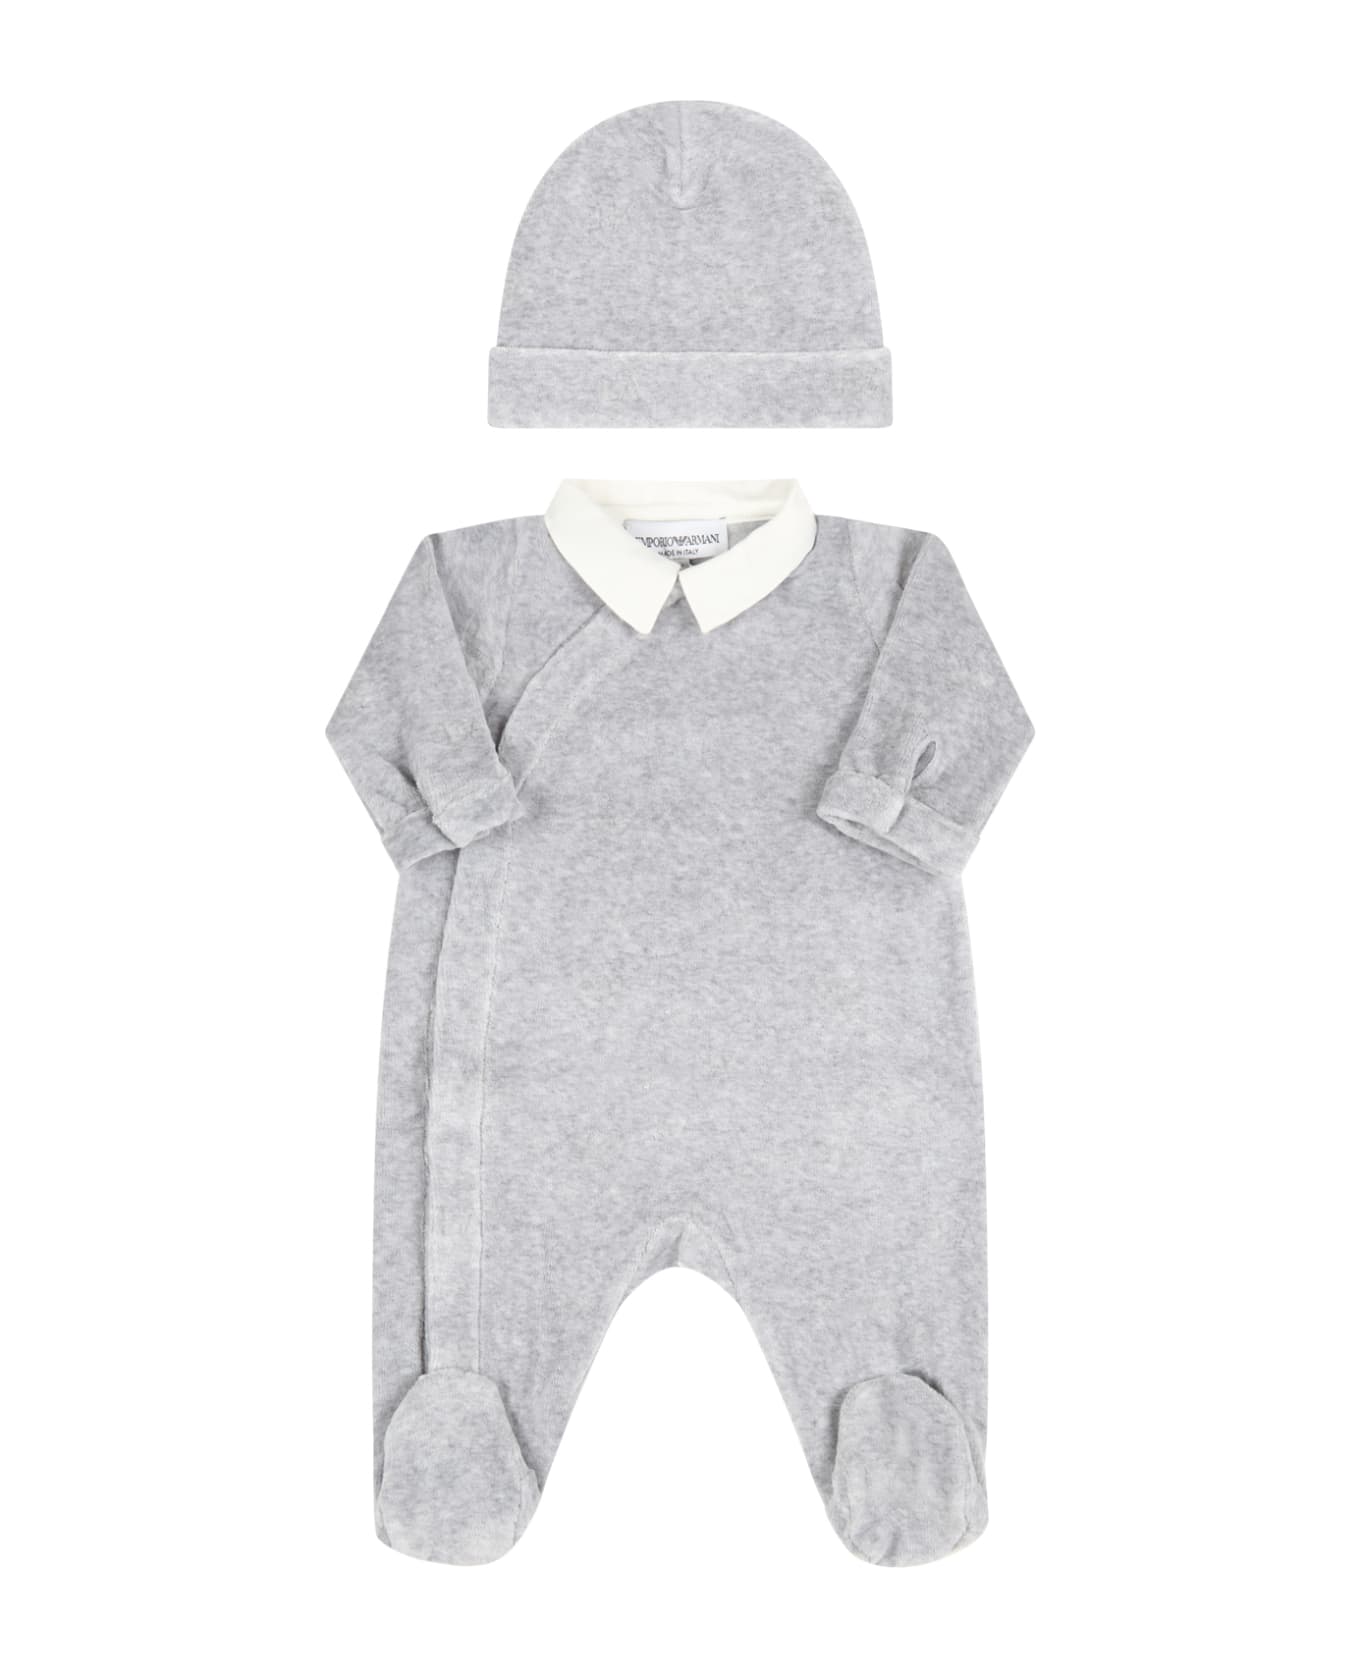 Armani Collezioni Gray Set For Baby Boy With Logo - Grey